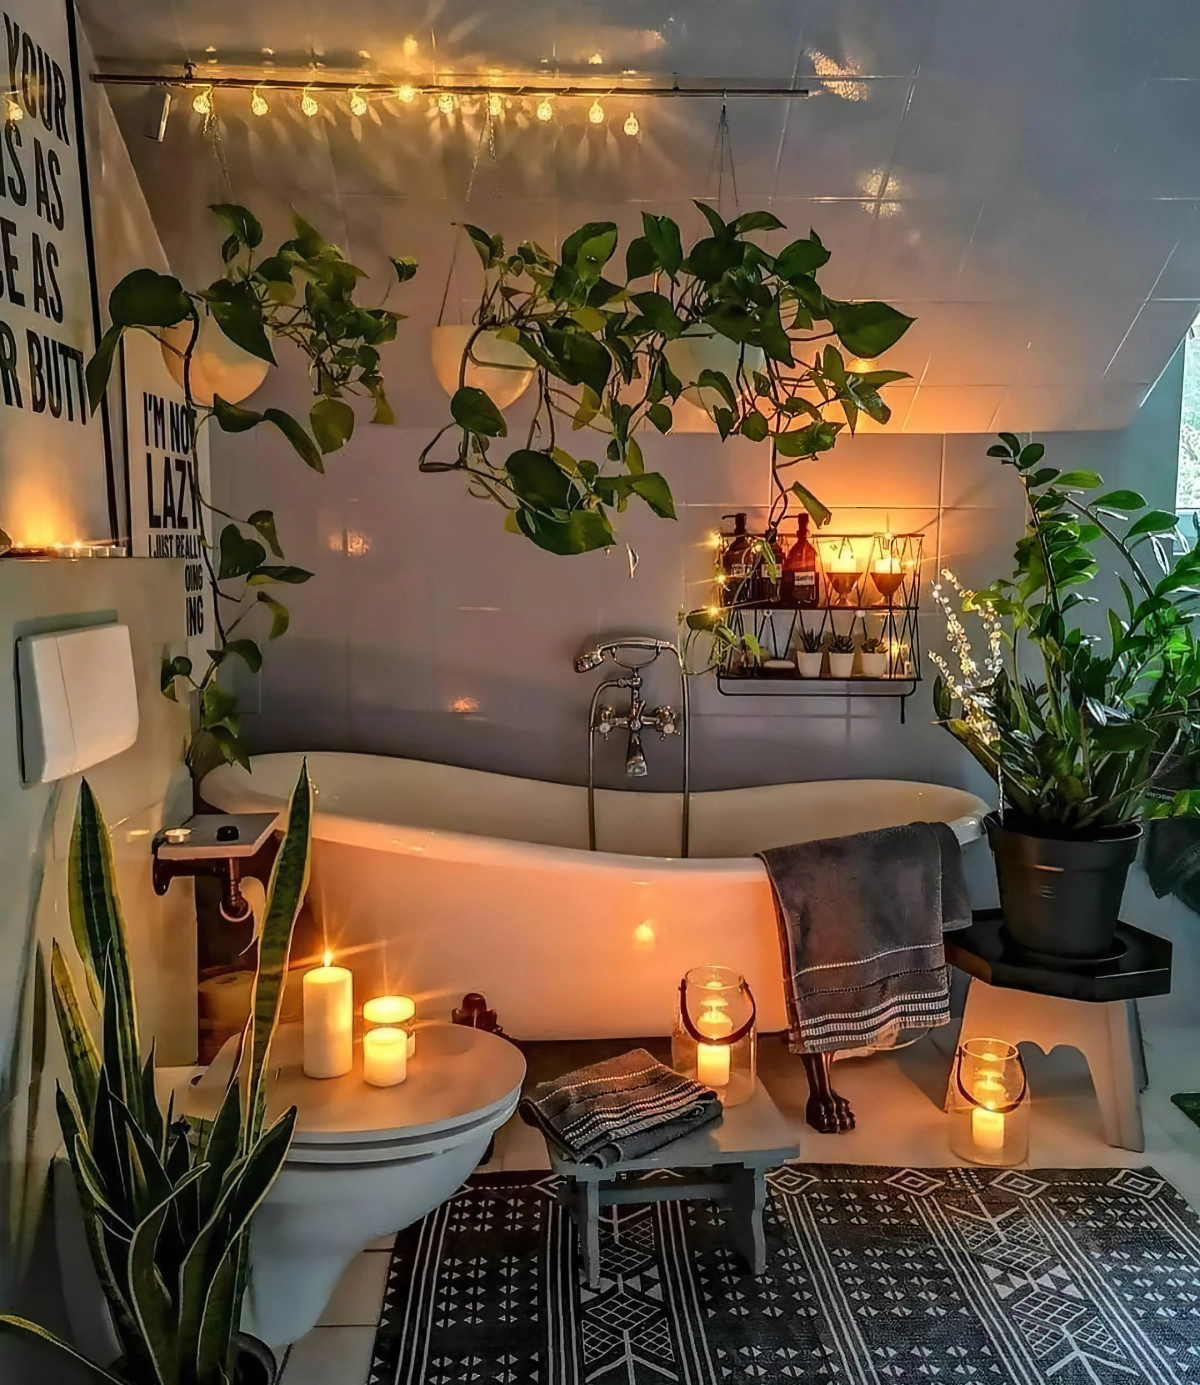 petite salle de bain avec baignoire guirlande lumineuse tapis berbere plantes